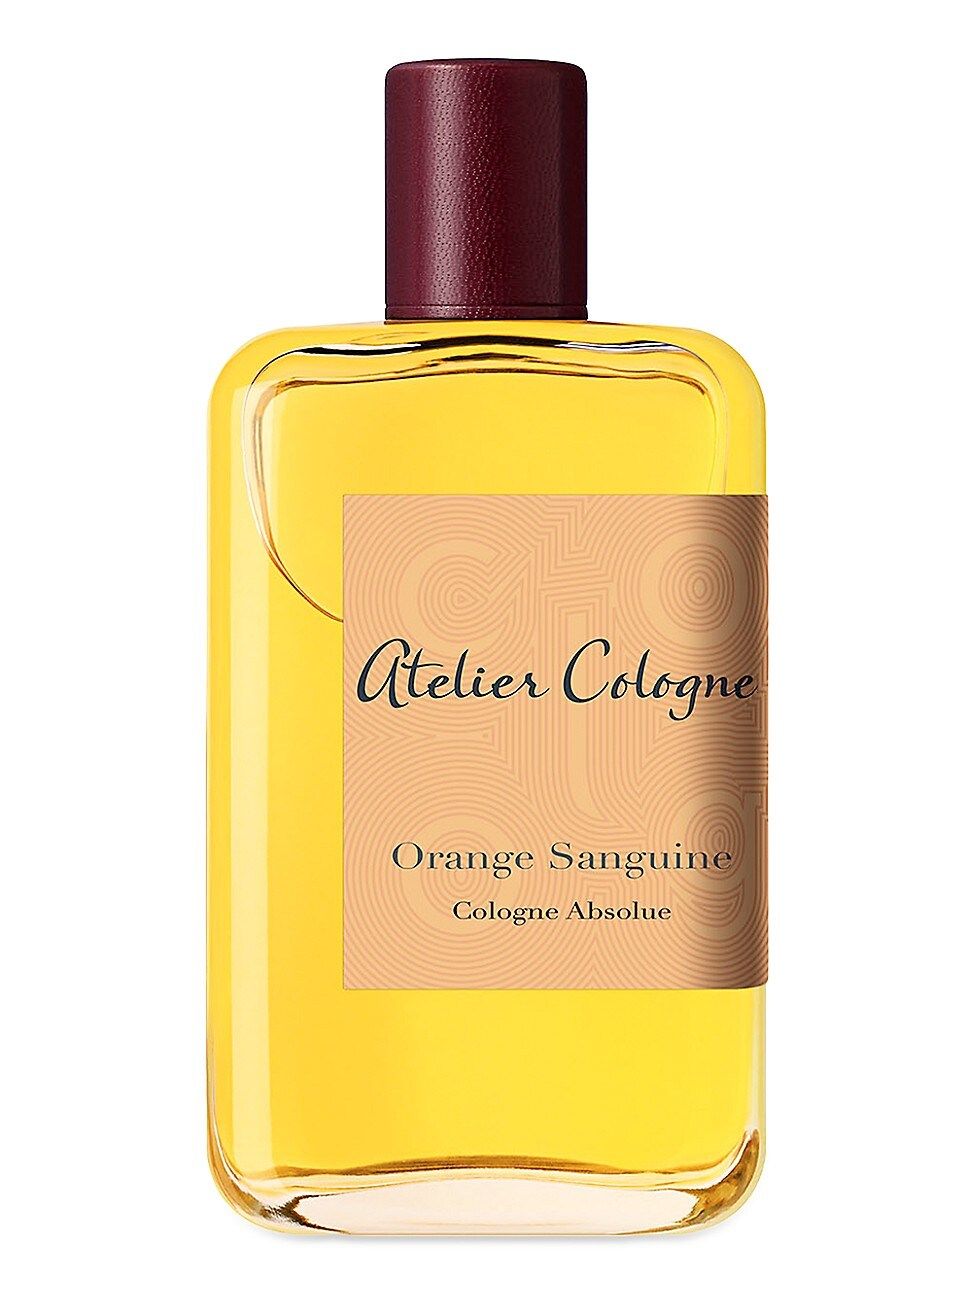 Atelier Cologne Orange Sanguine Cologne Absolue | Saks Fifth Avenue